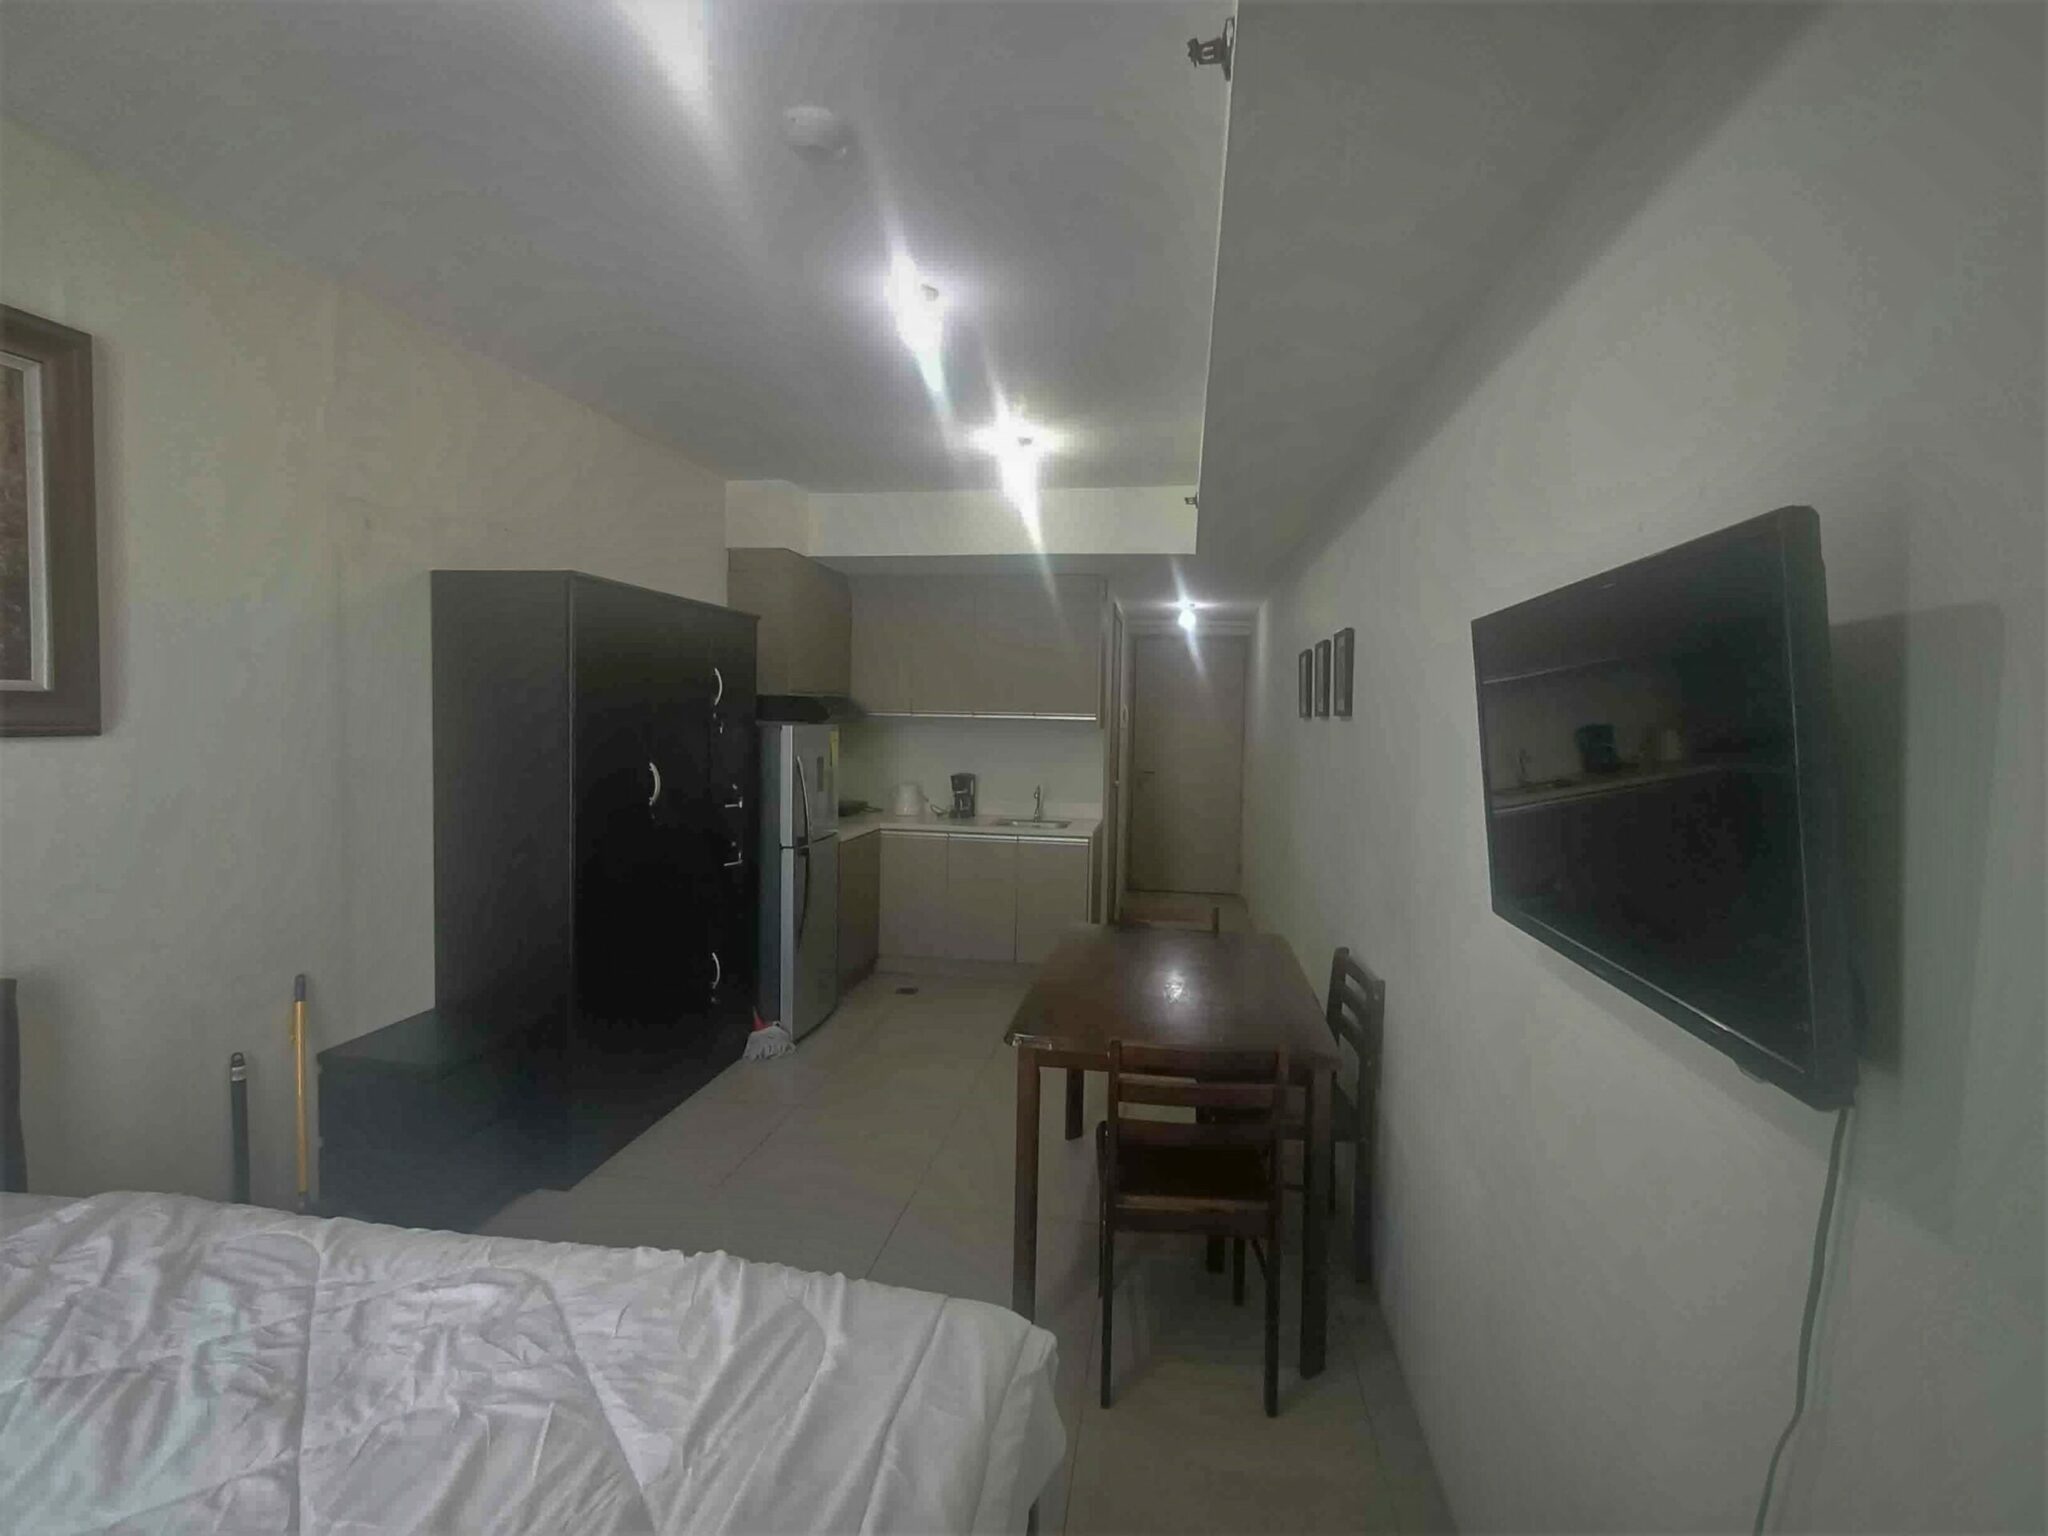 Condo Unit For Rent – Unit 36H at Antel Serenity Suites